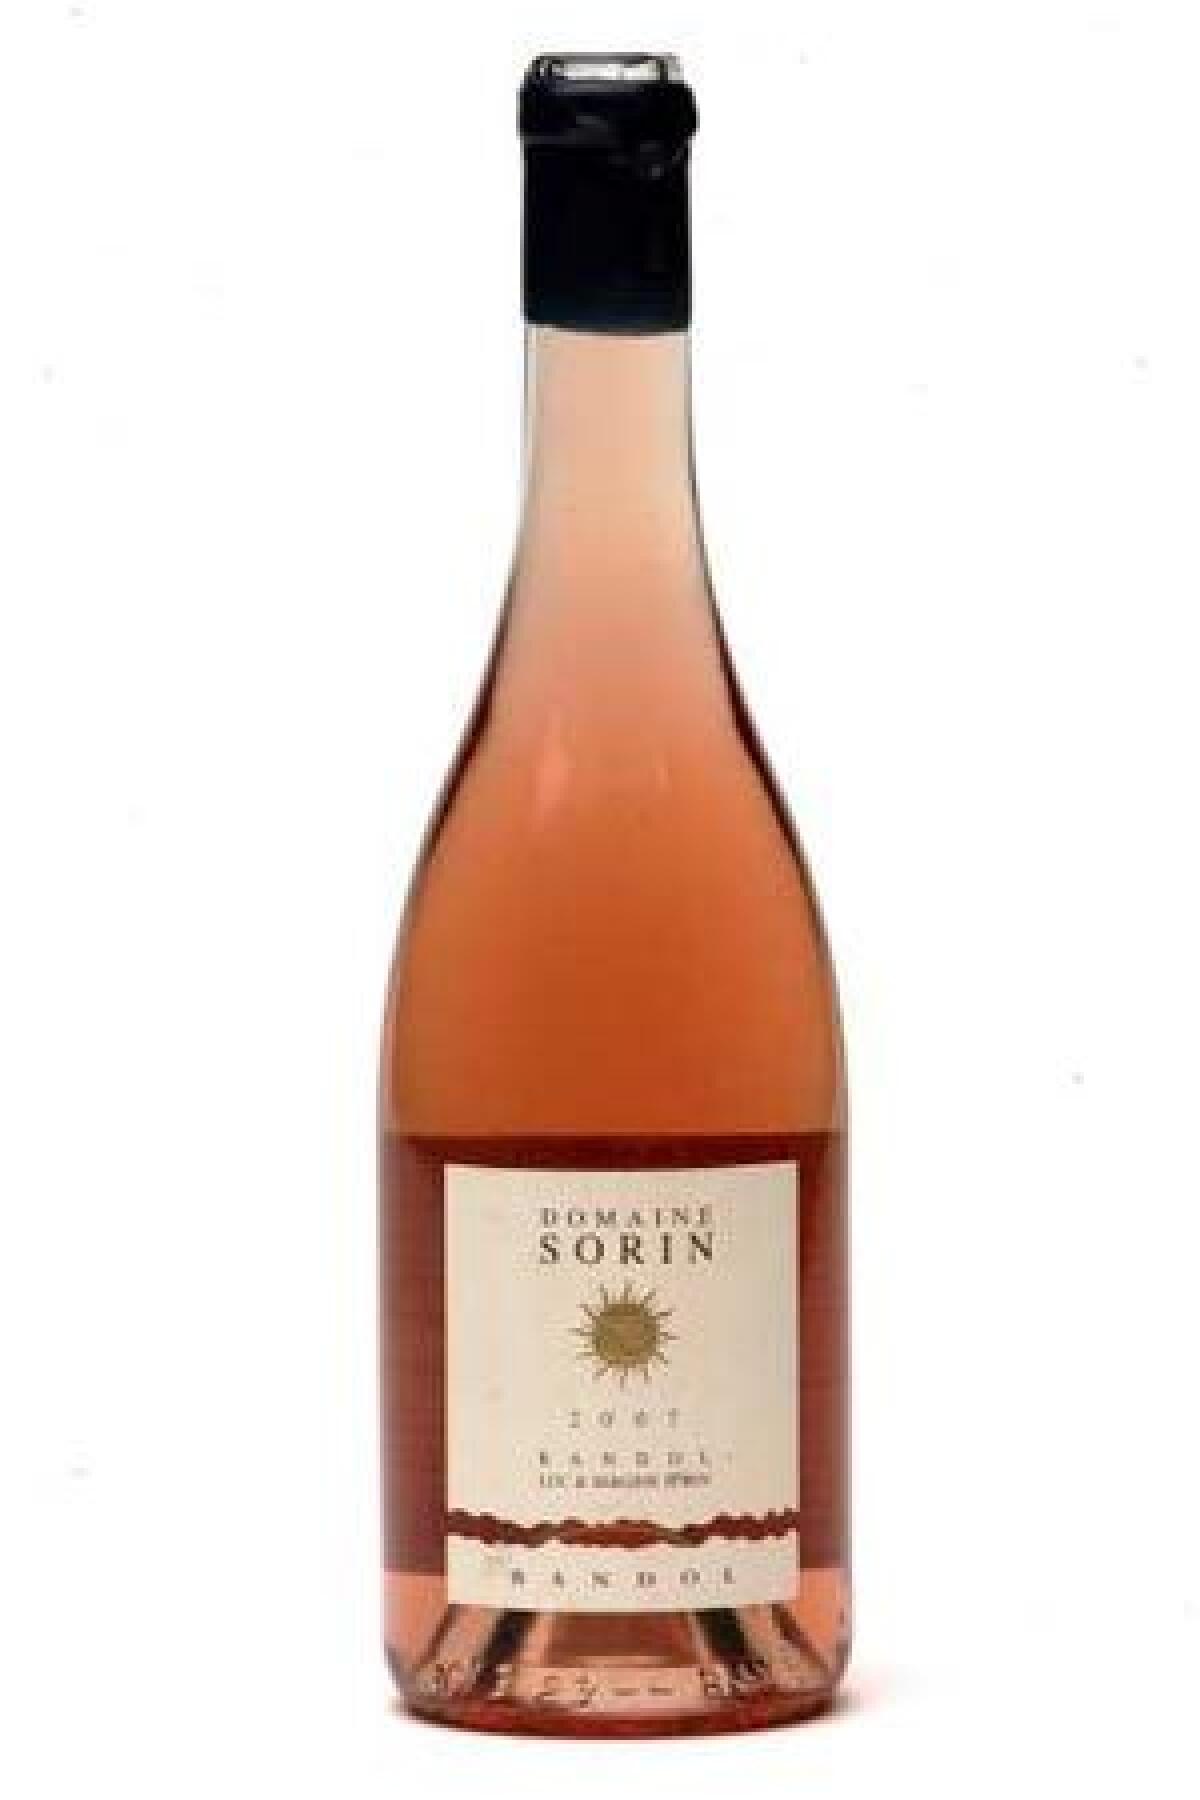 2007 Domaine Sorin Bandol rosé